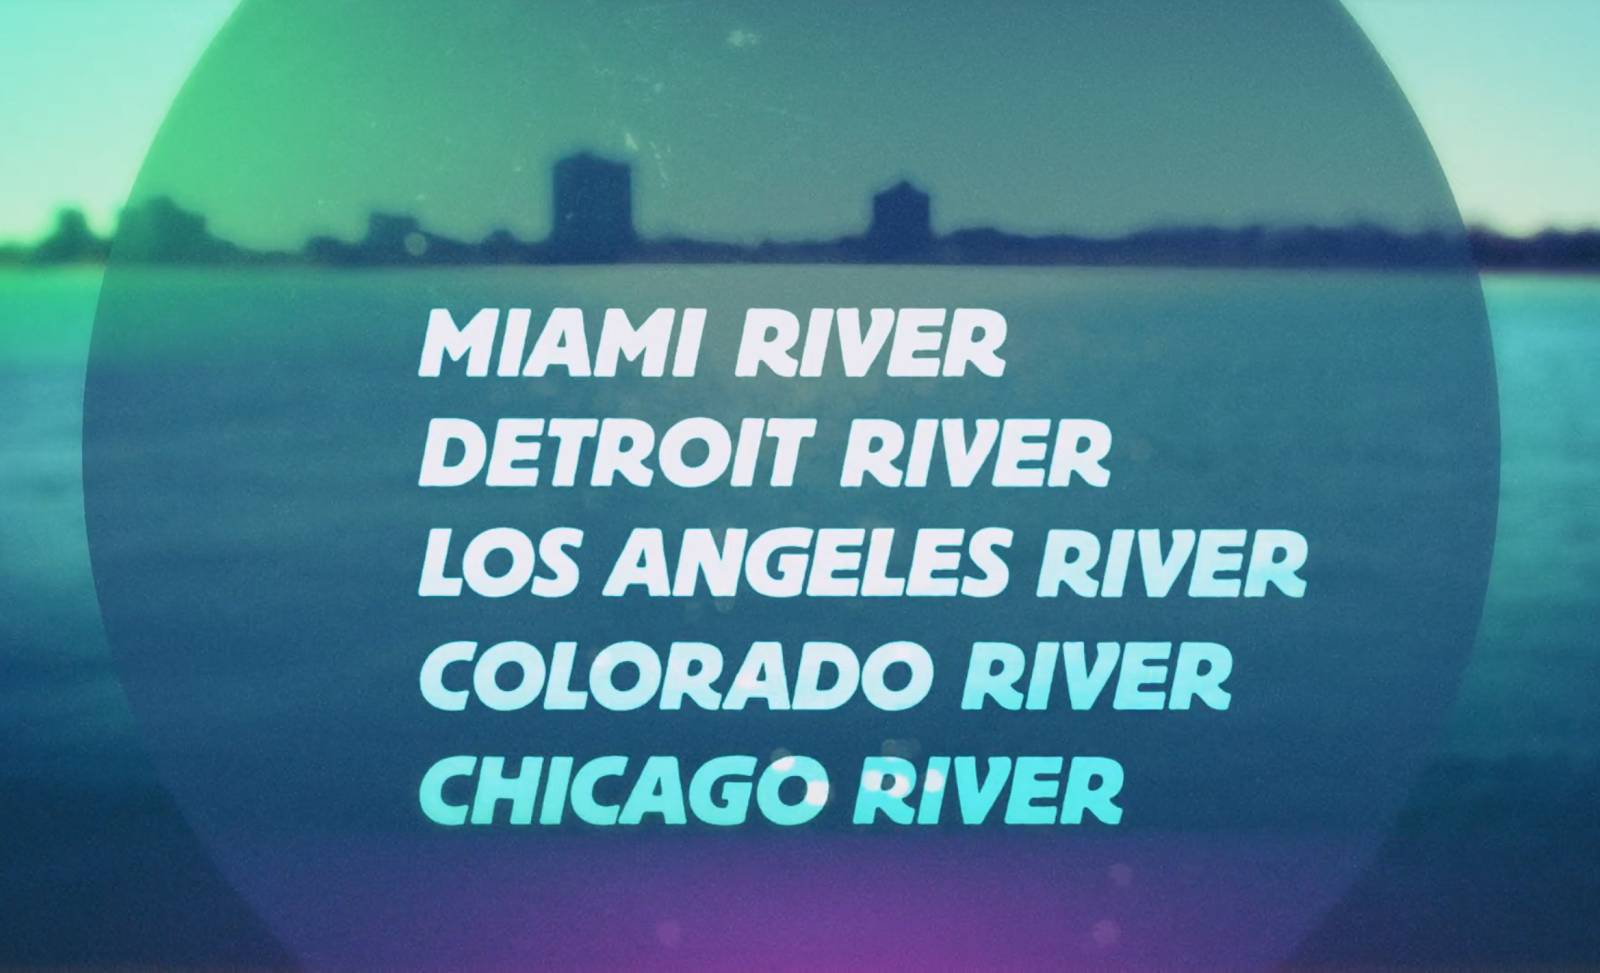 Trailer for "American Rivers" film series